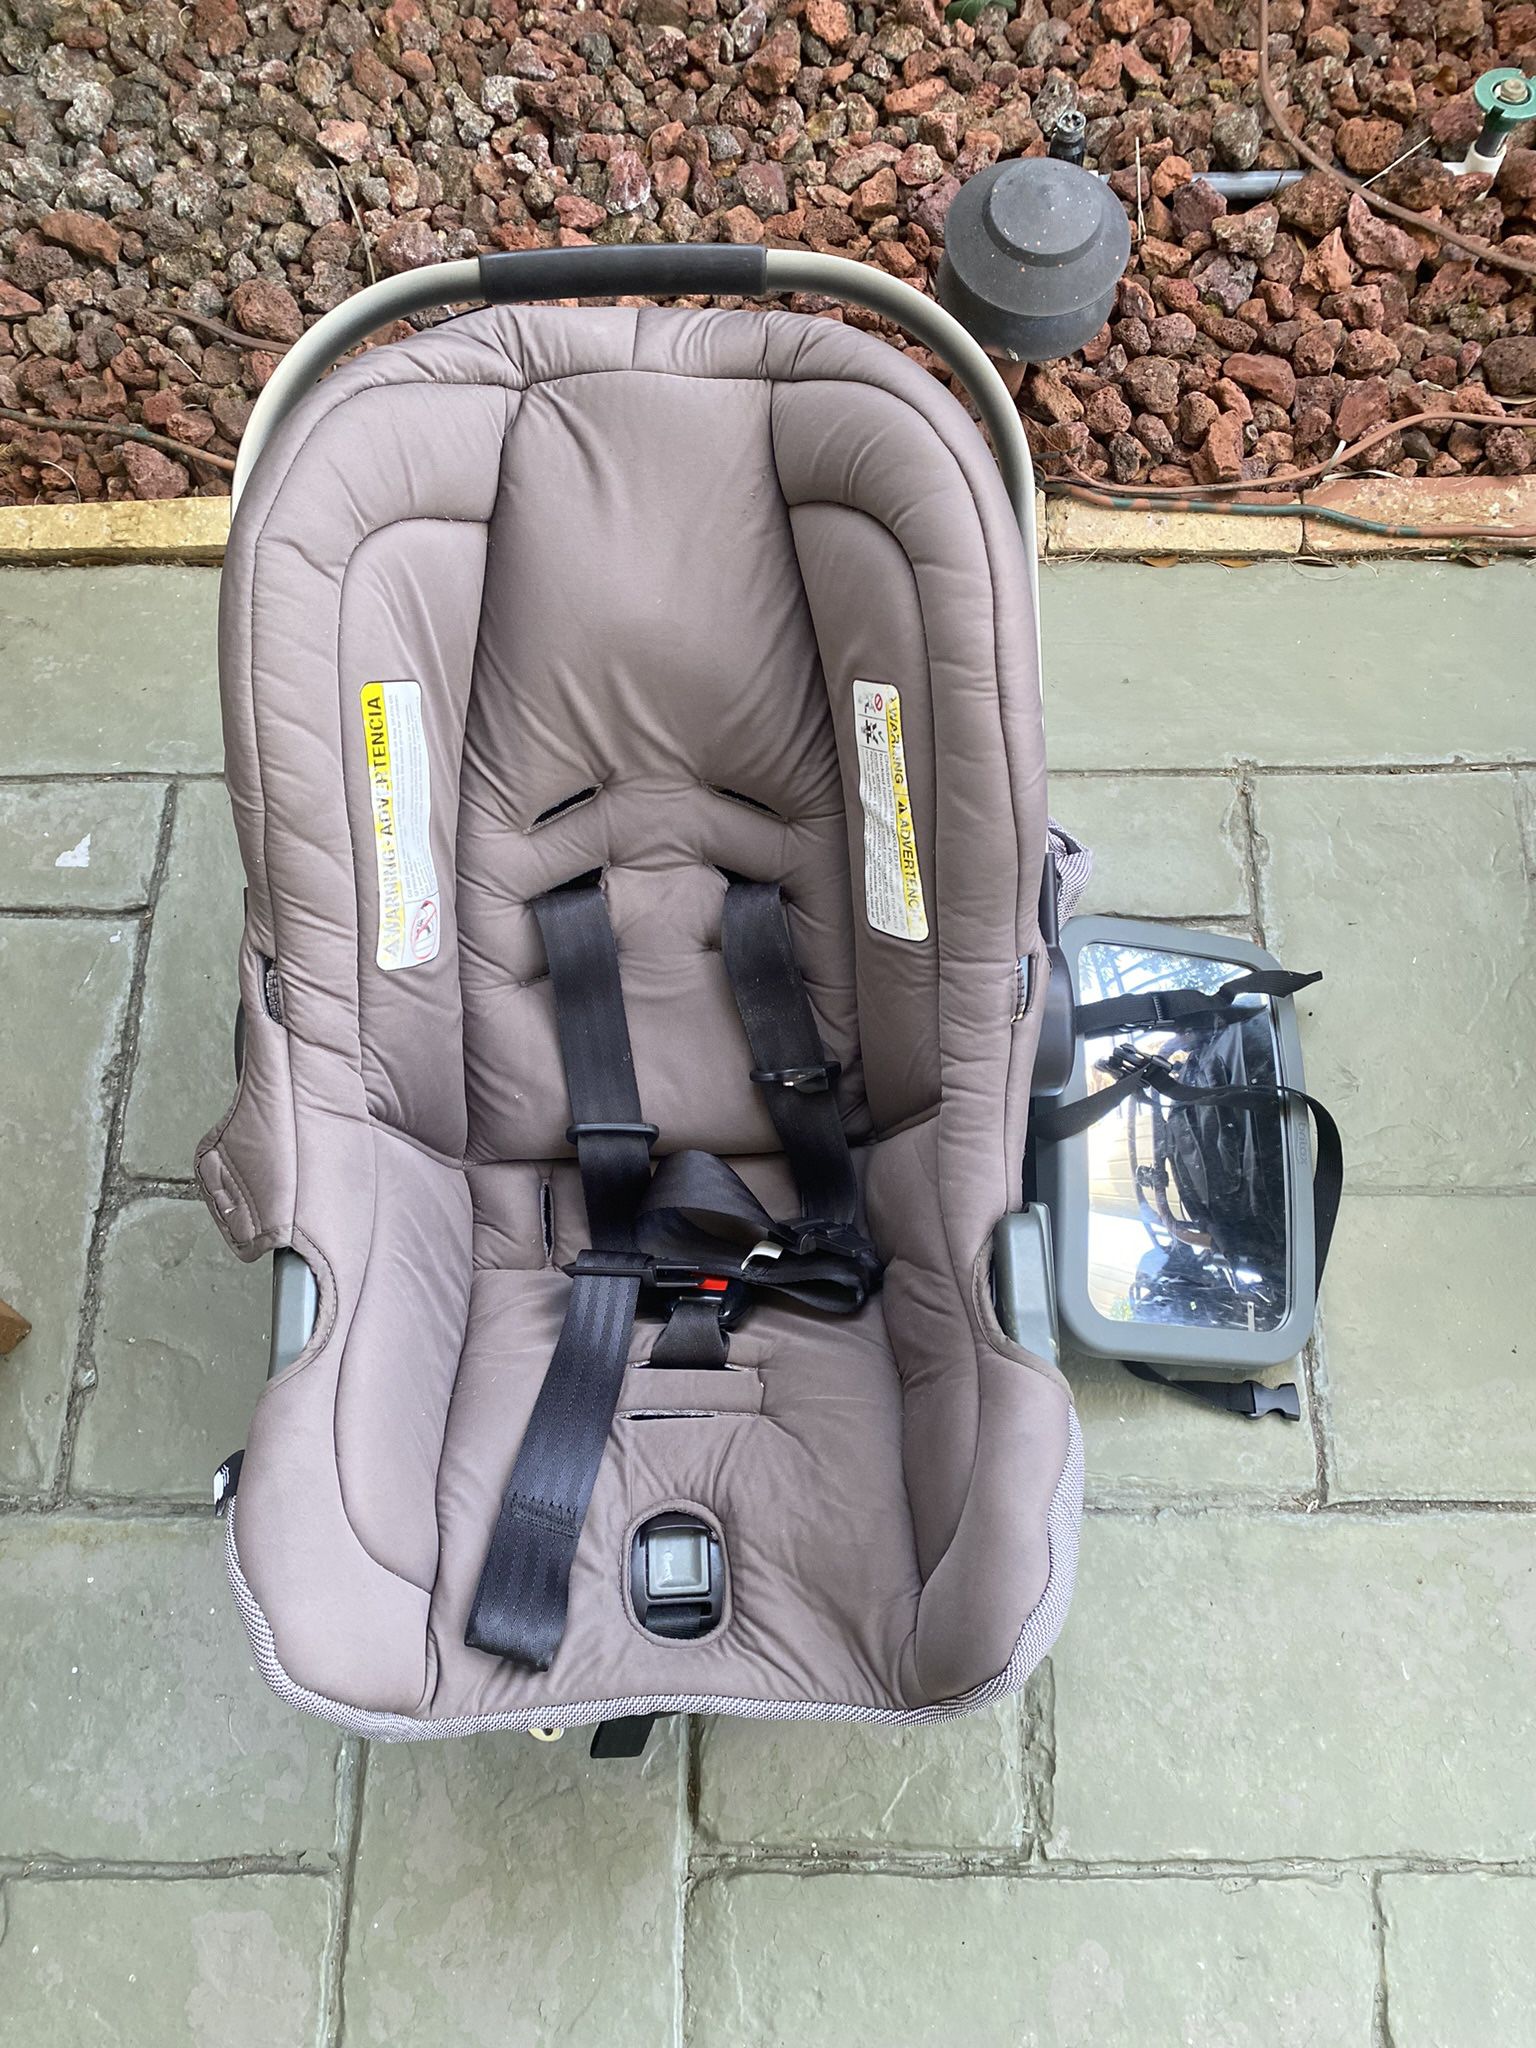 Nuna Car Seat Newborn To Infant With Base 